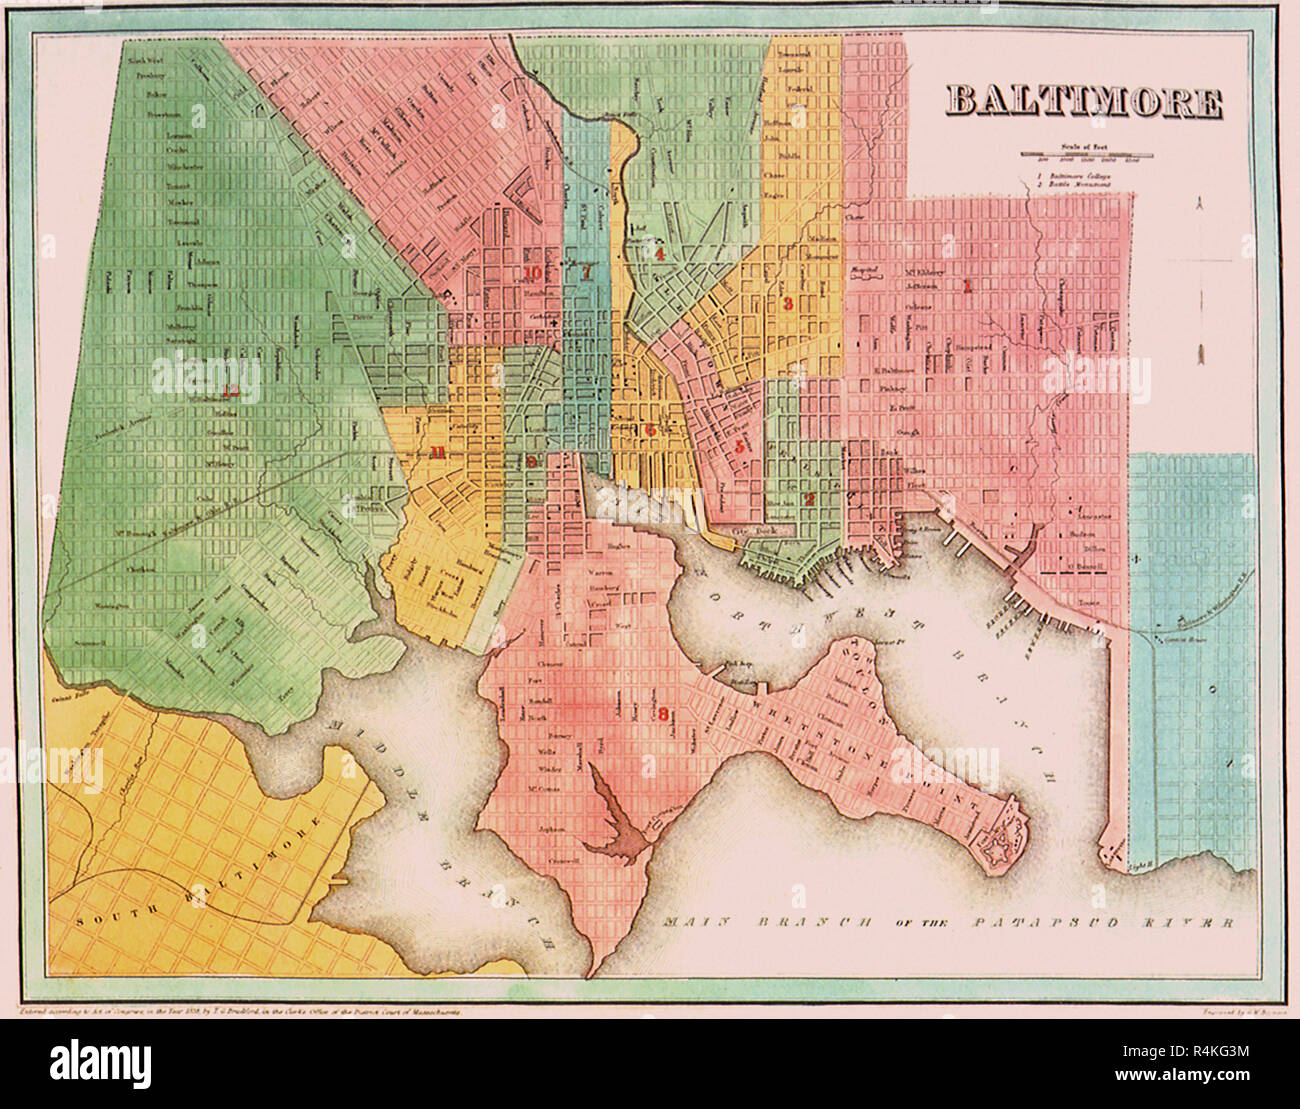 Map of Baltimore 1837, Bradford, T.G. Stock Photo